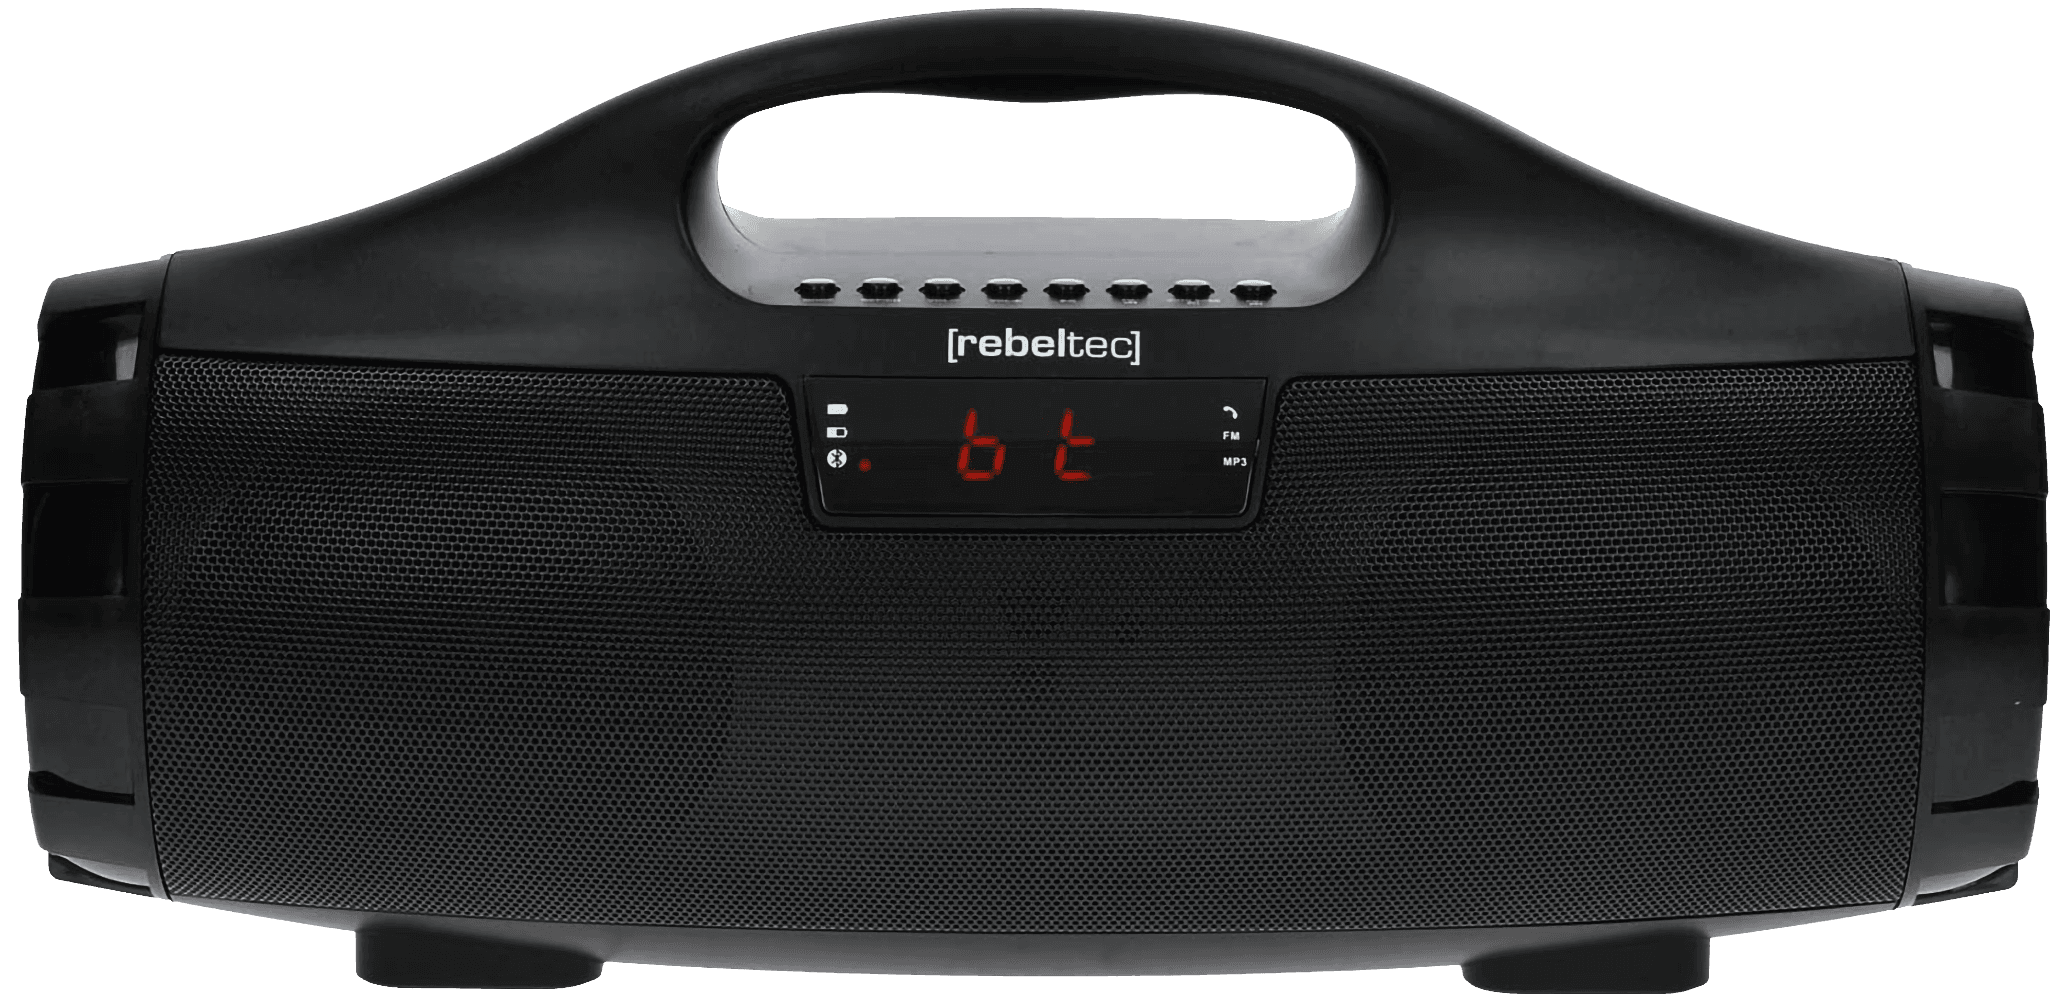 Huawei Nova Lite kompatibilis bluetooth hangszóró Rebeltec Soundbox 390 fekete